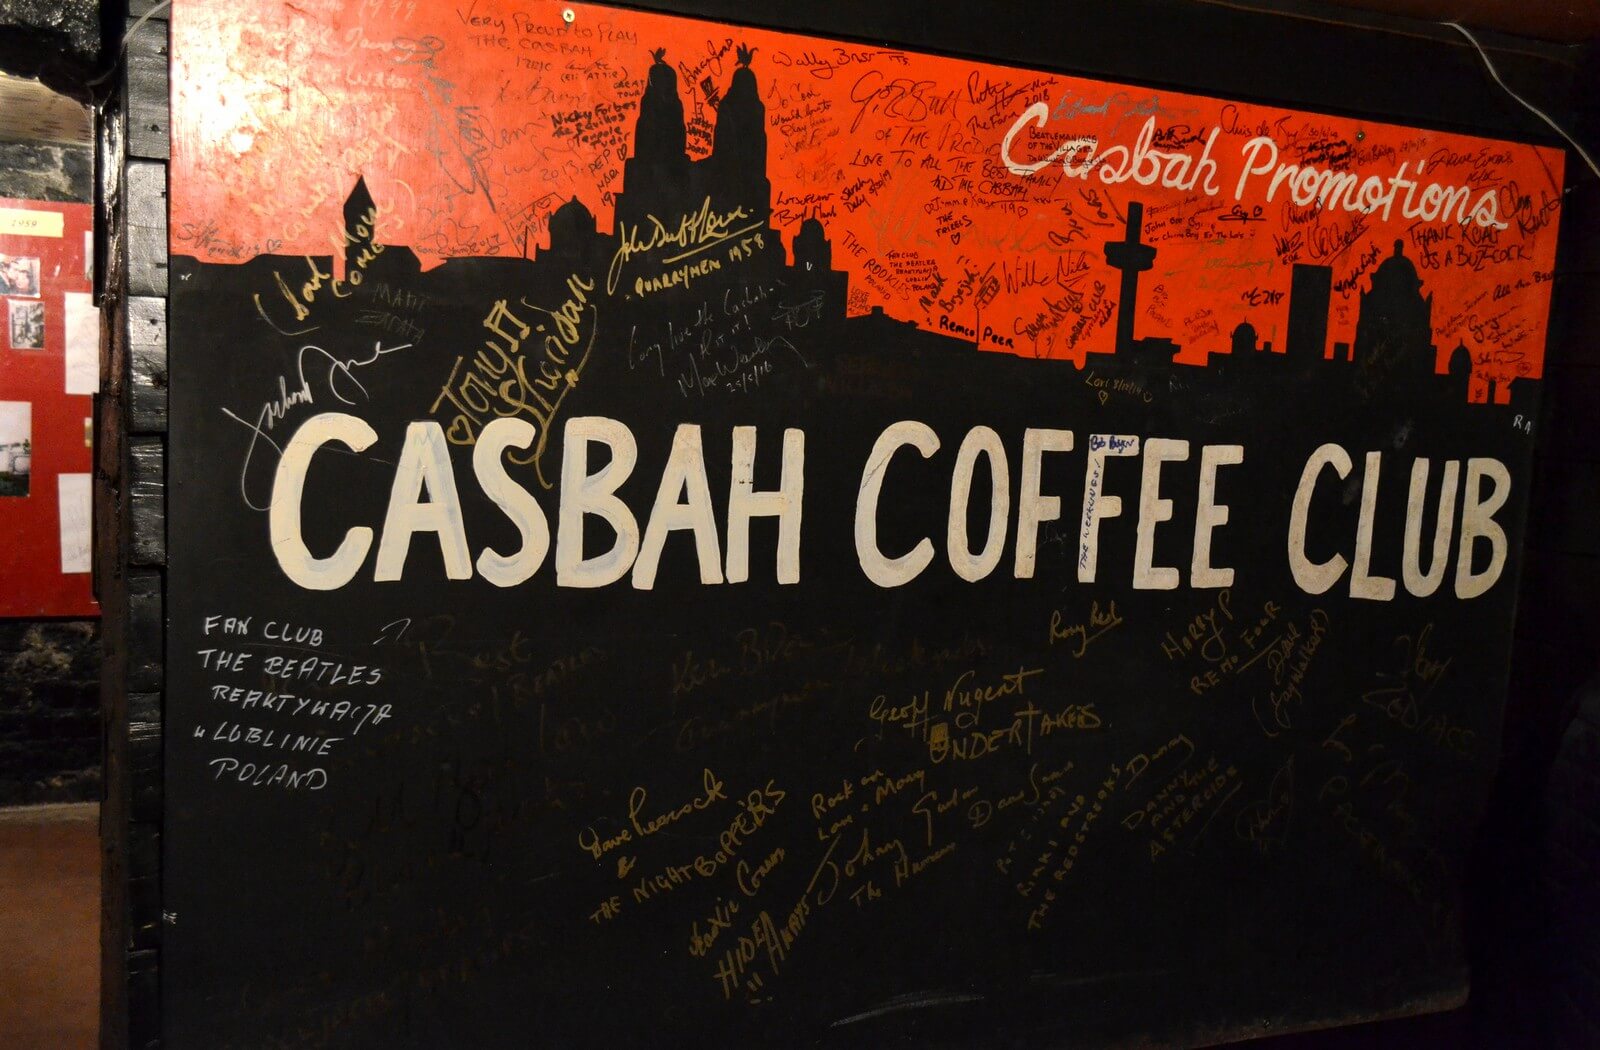 Foto: Der Casbah Coffee Club in Liverpool - Bildrechte Harald Kother - Lupe Reisen